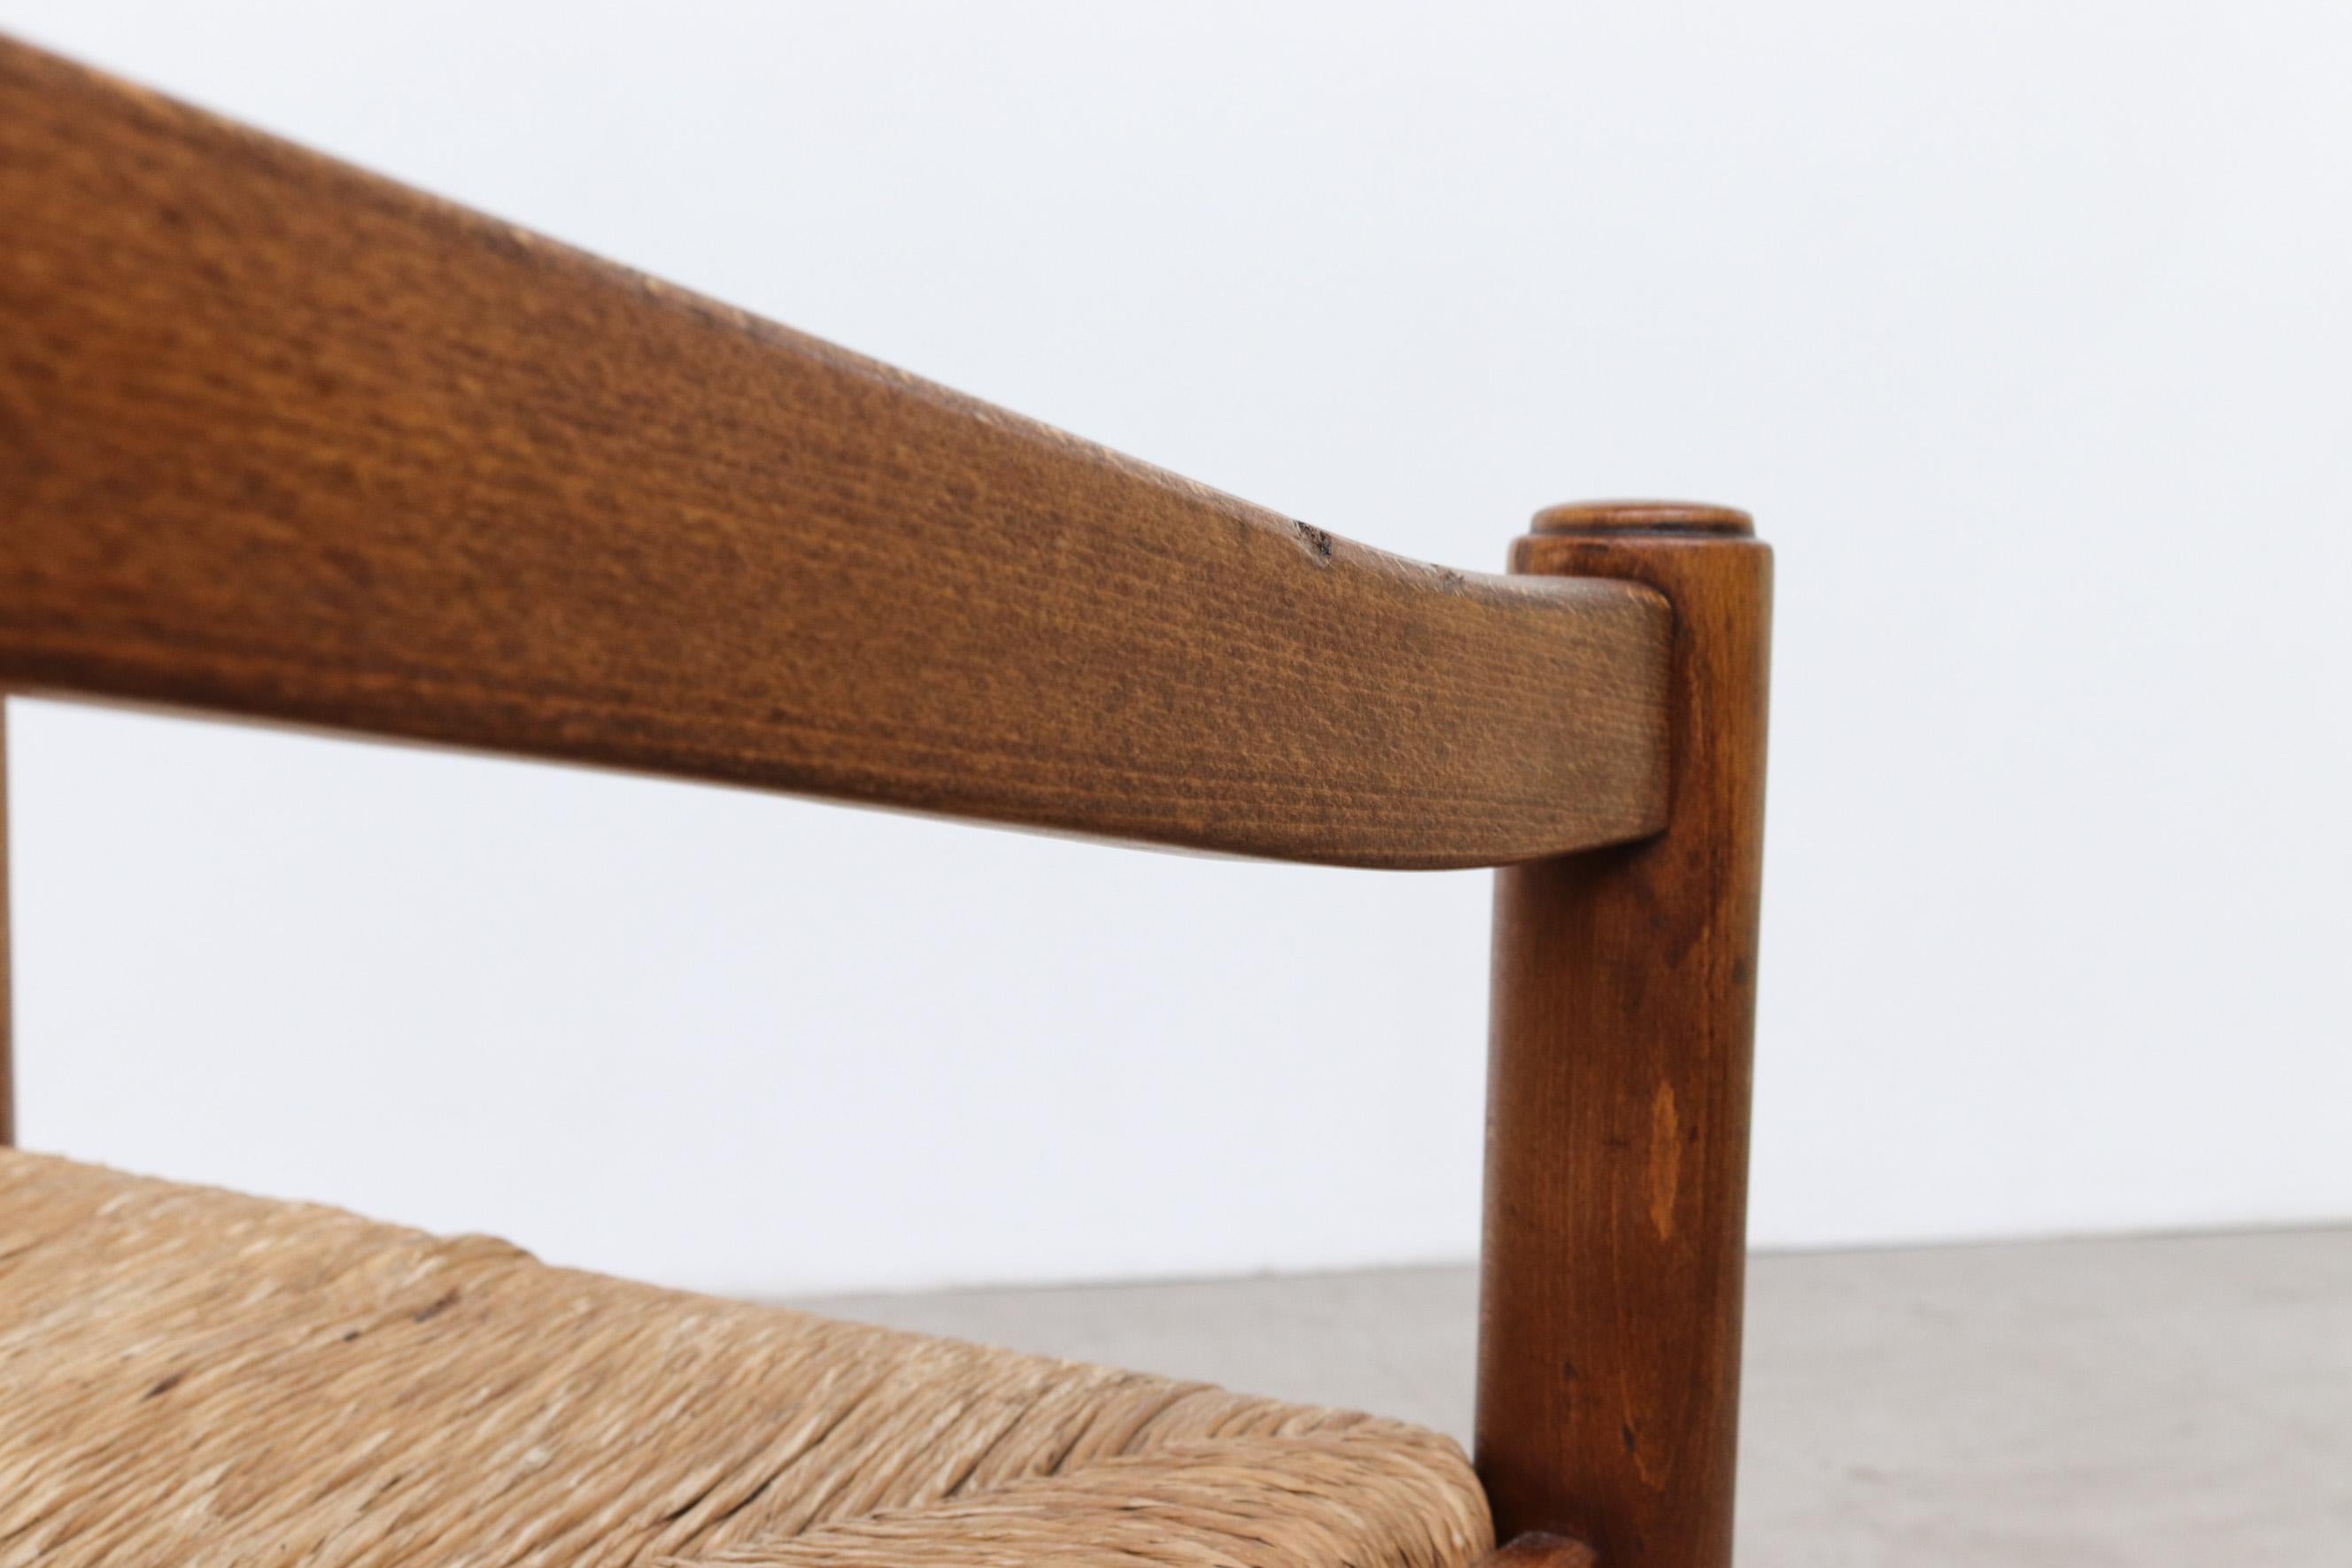 Single Vico Magistretti 'Attr' Rush Arm Chair 14